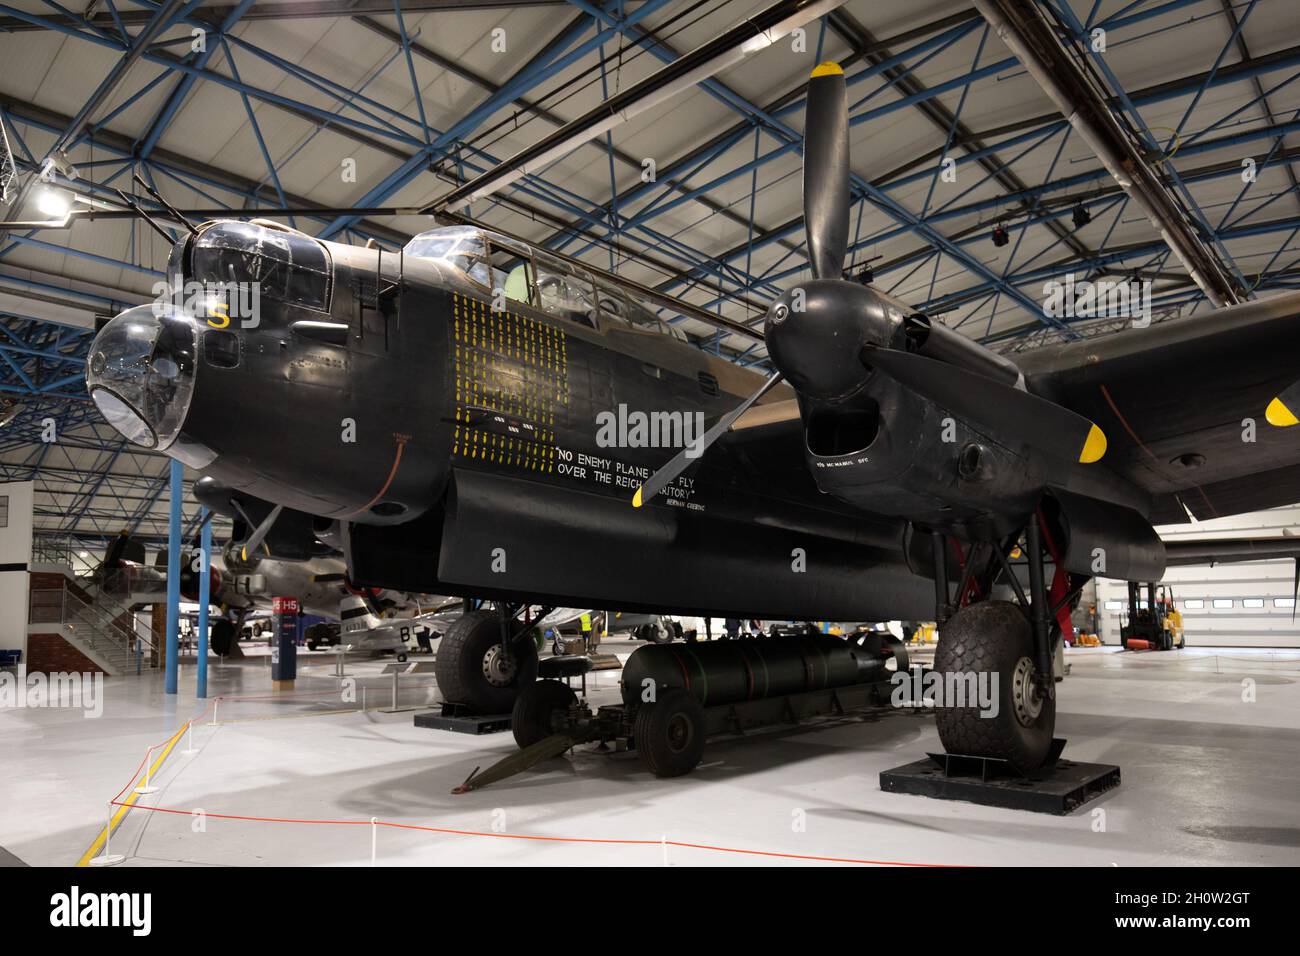 Avro Lancaster bomber, Royal Air Force Museum, London Stock Photo